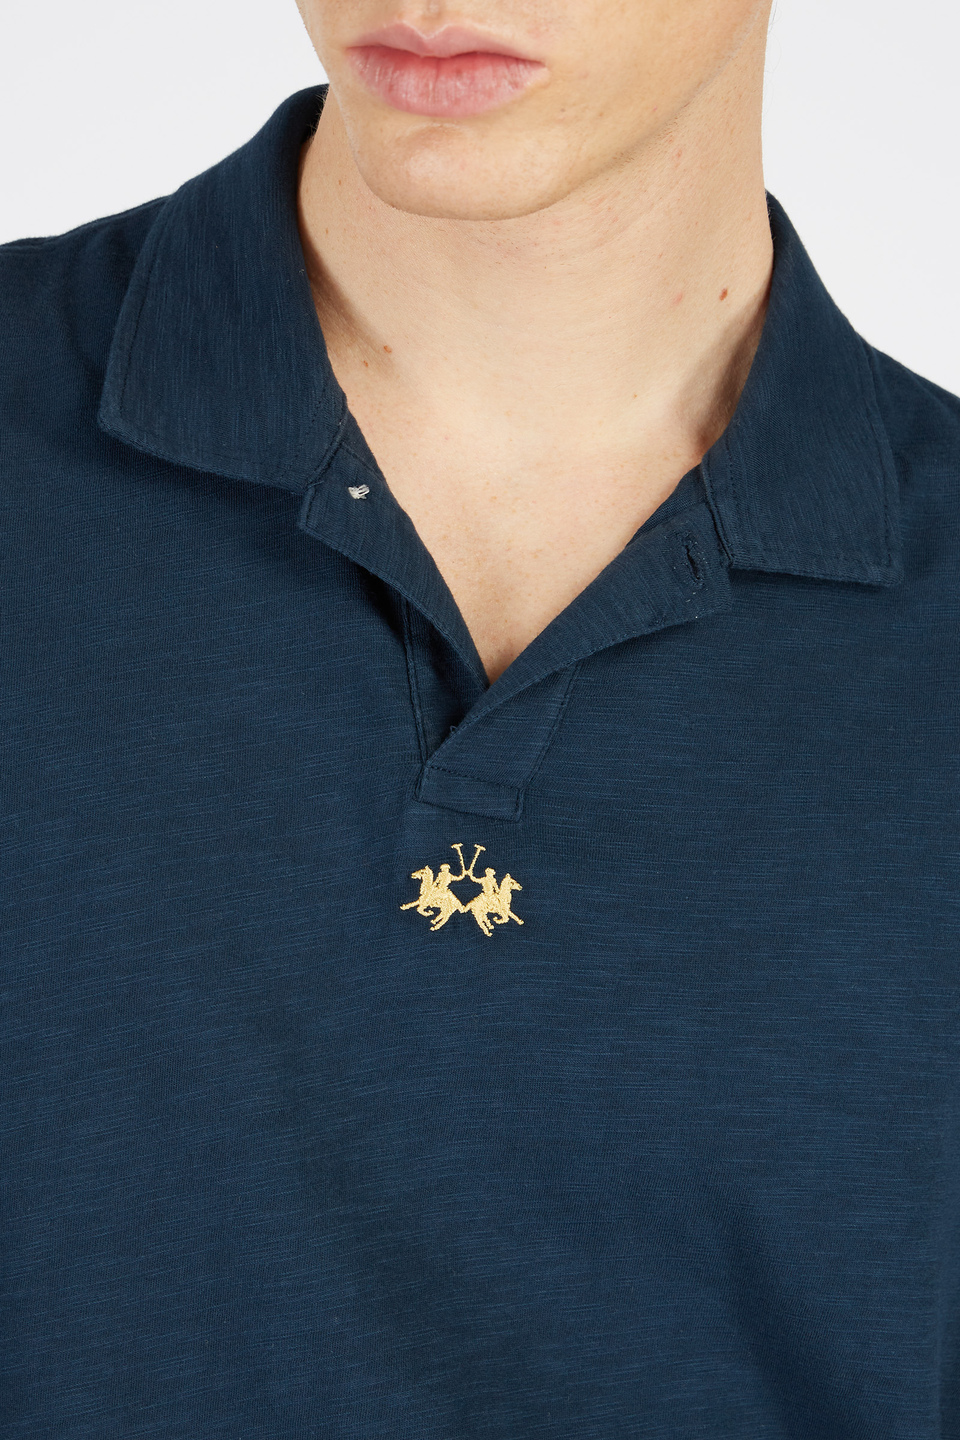 Men's polo shirt in a regular fit - Polo 19-42 | La Martina - Official Online Shop